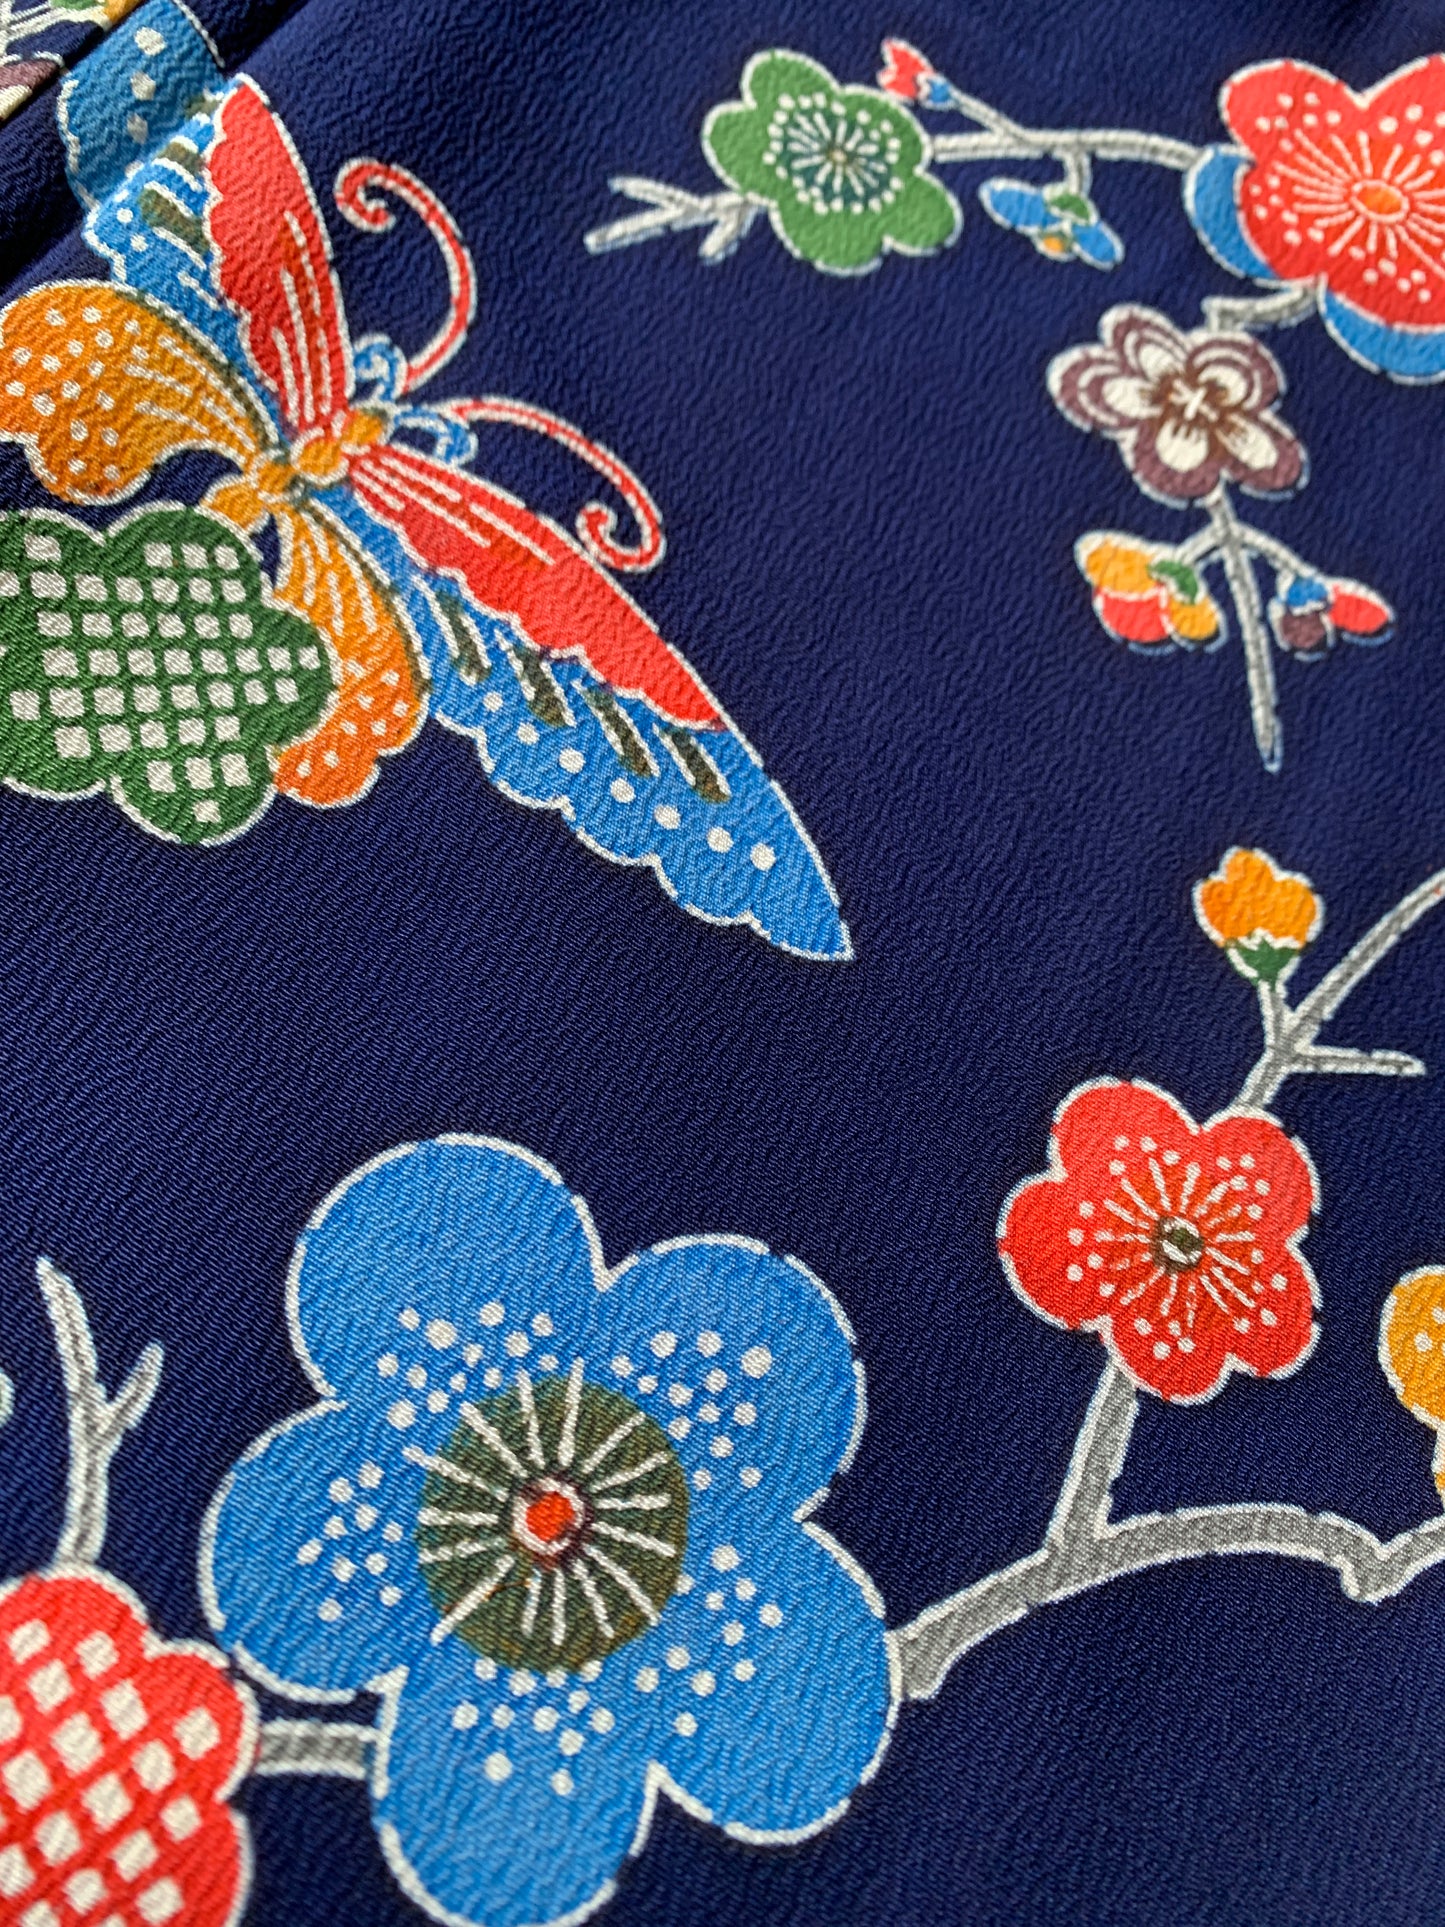 Reserved for Katherine : Kimono fabric for custom dress order, fabric #100